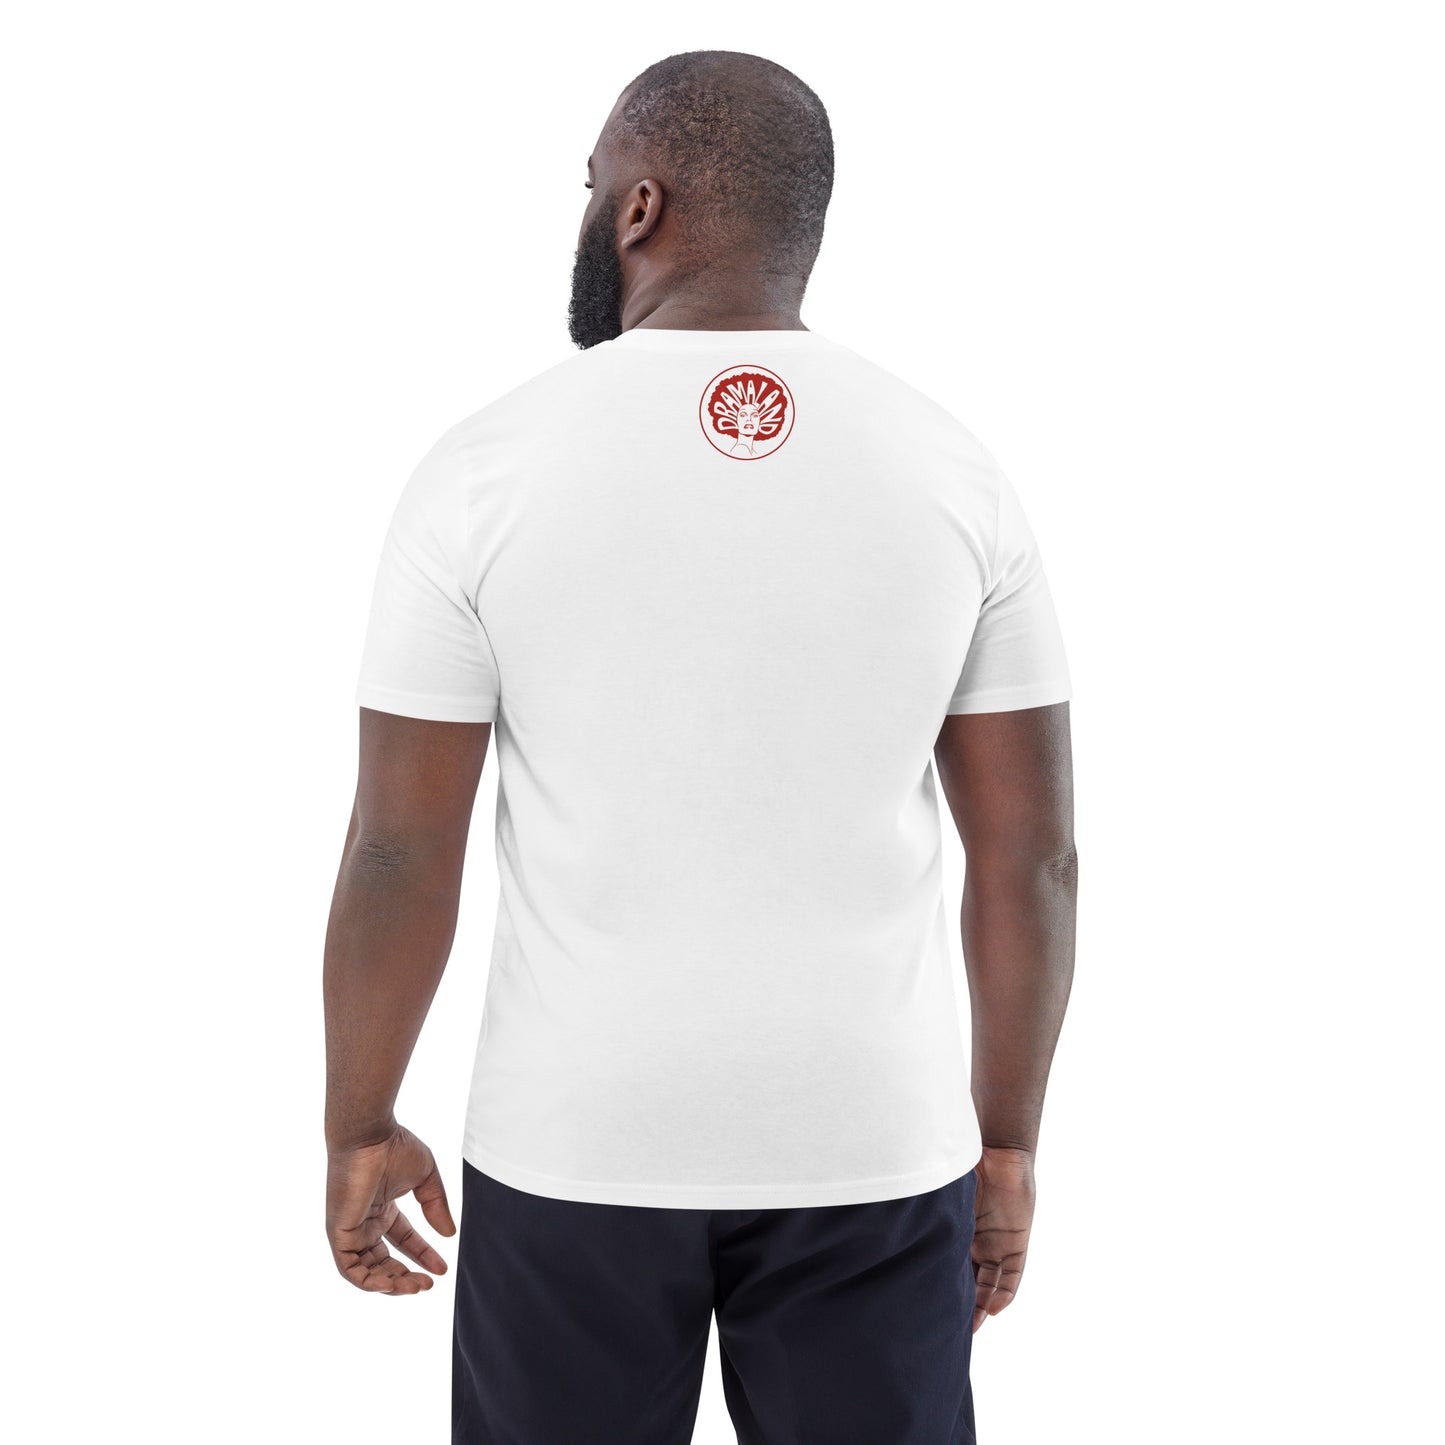 Size S - White short-sleeved T-shirt CHER OR NOT CHER